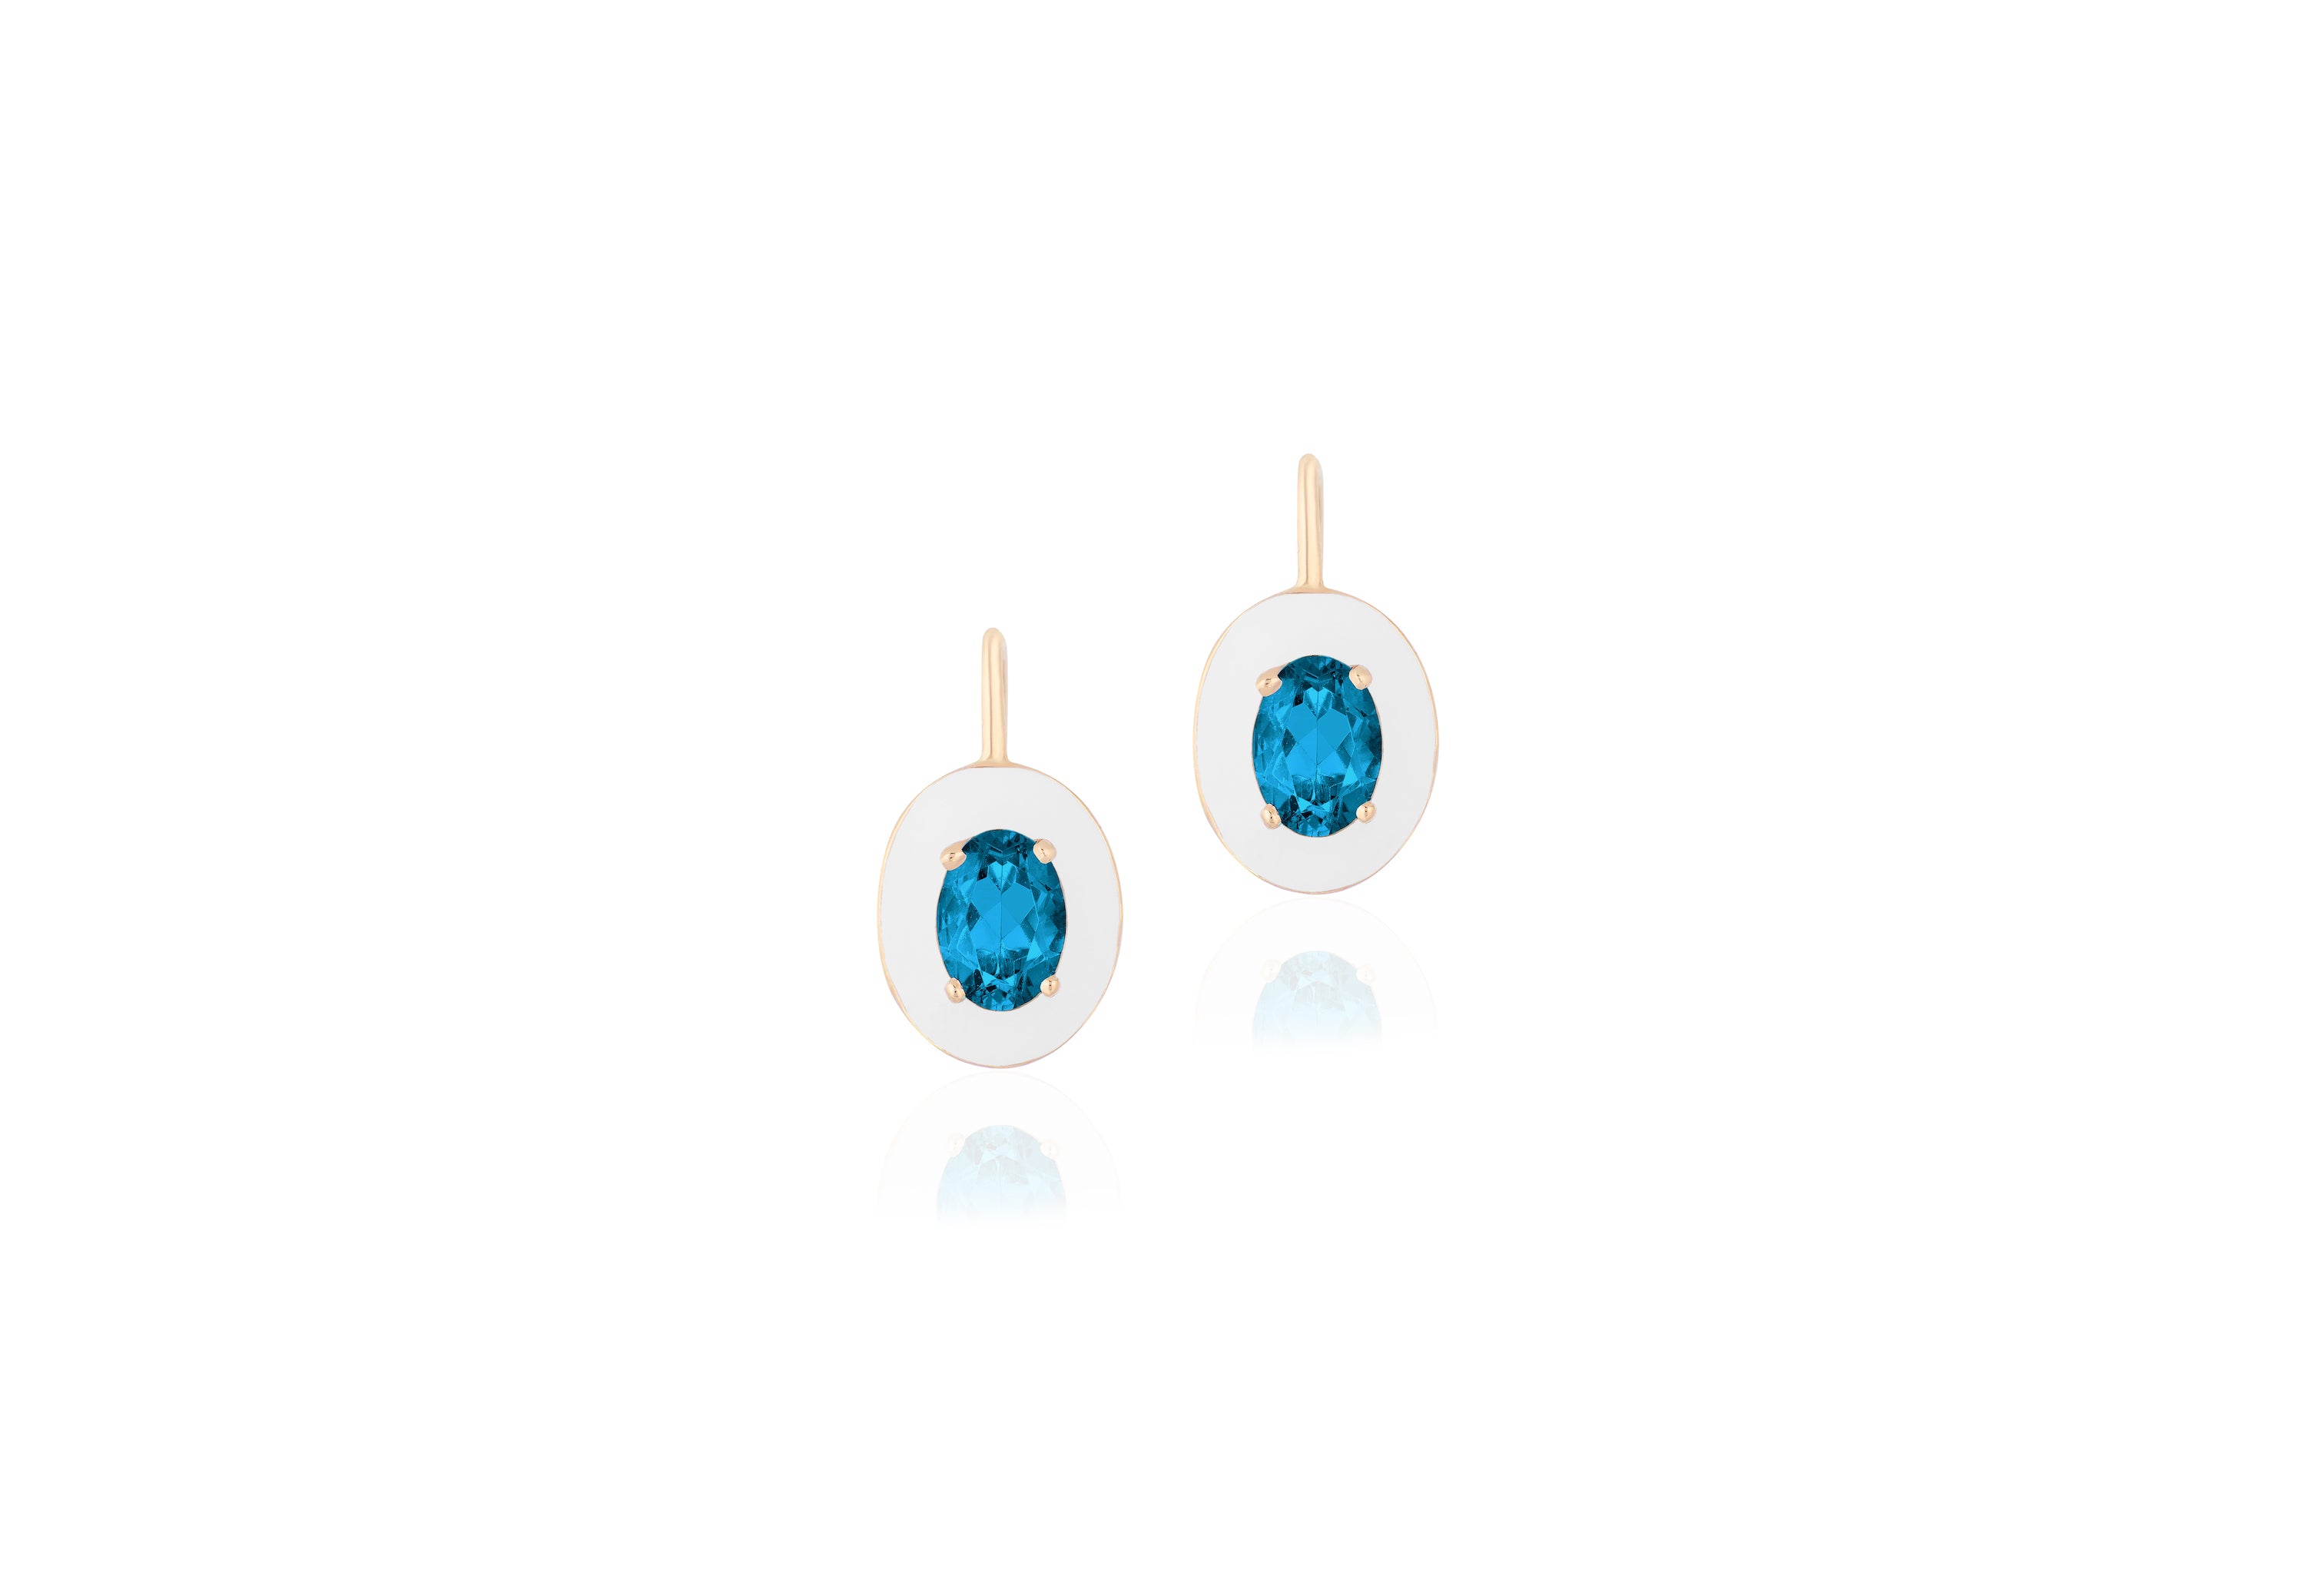 Faceted Oval Earrings with Enamel Studs Goshwara London Blue Topaz with White Enamel  